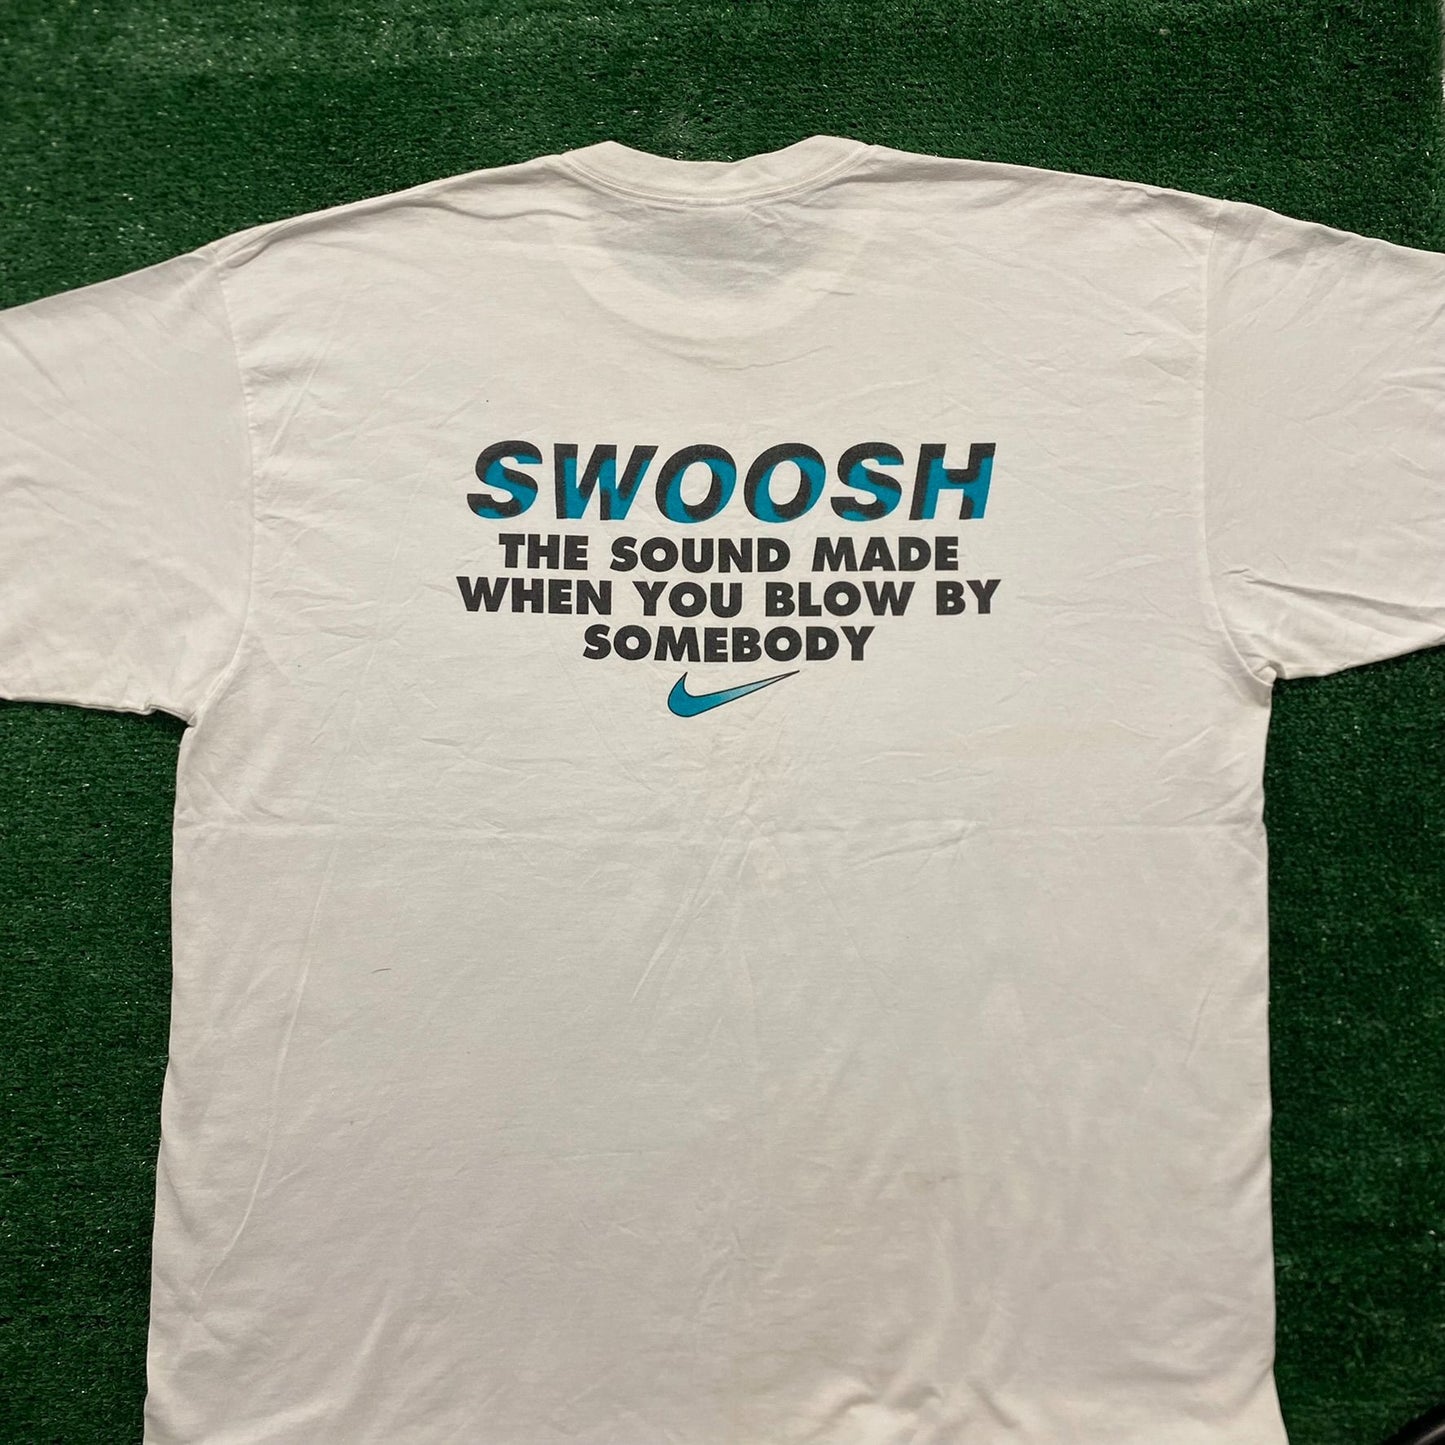 Vintage 90s Essential Baggy Nike Center Swoosh T-Shirt